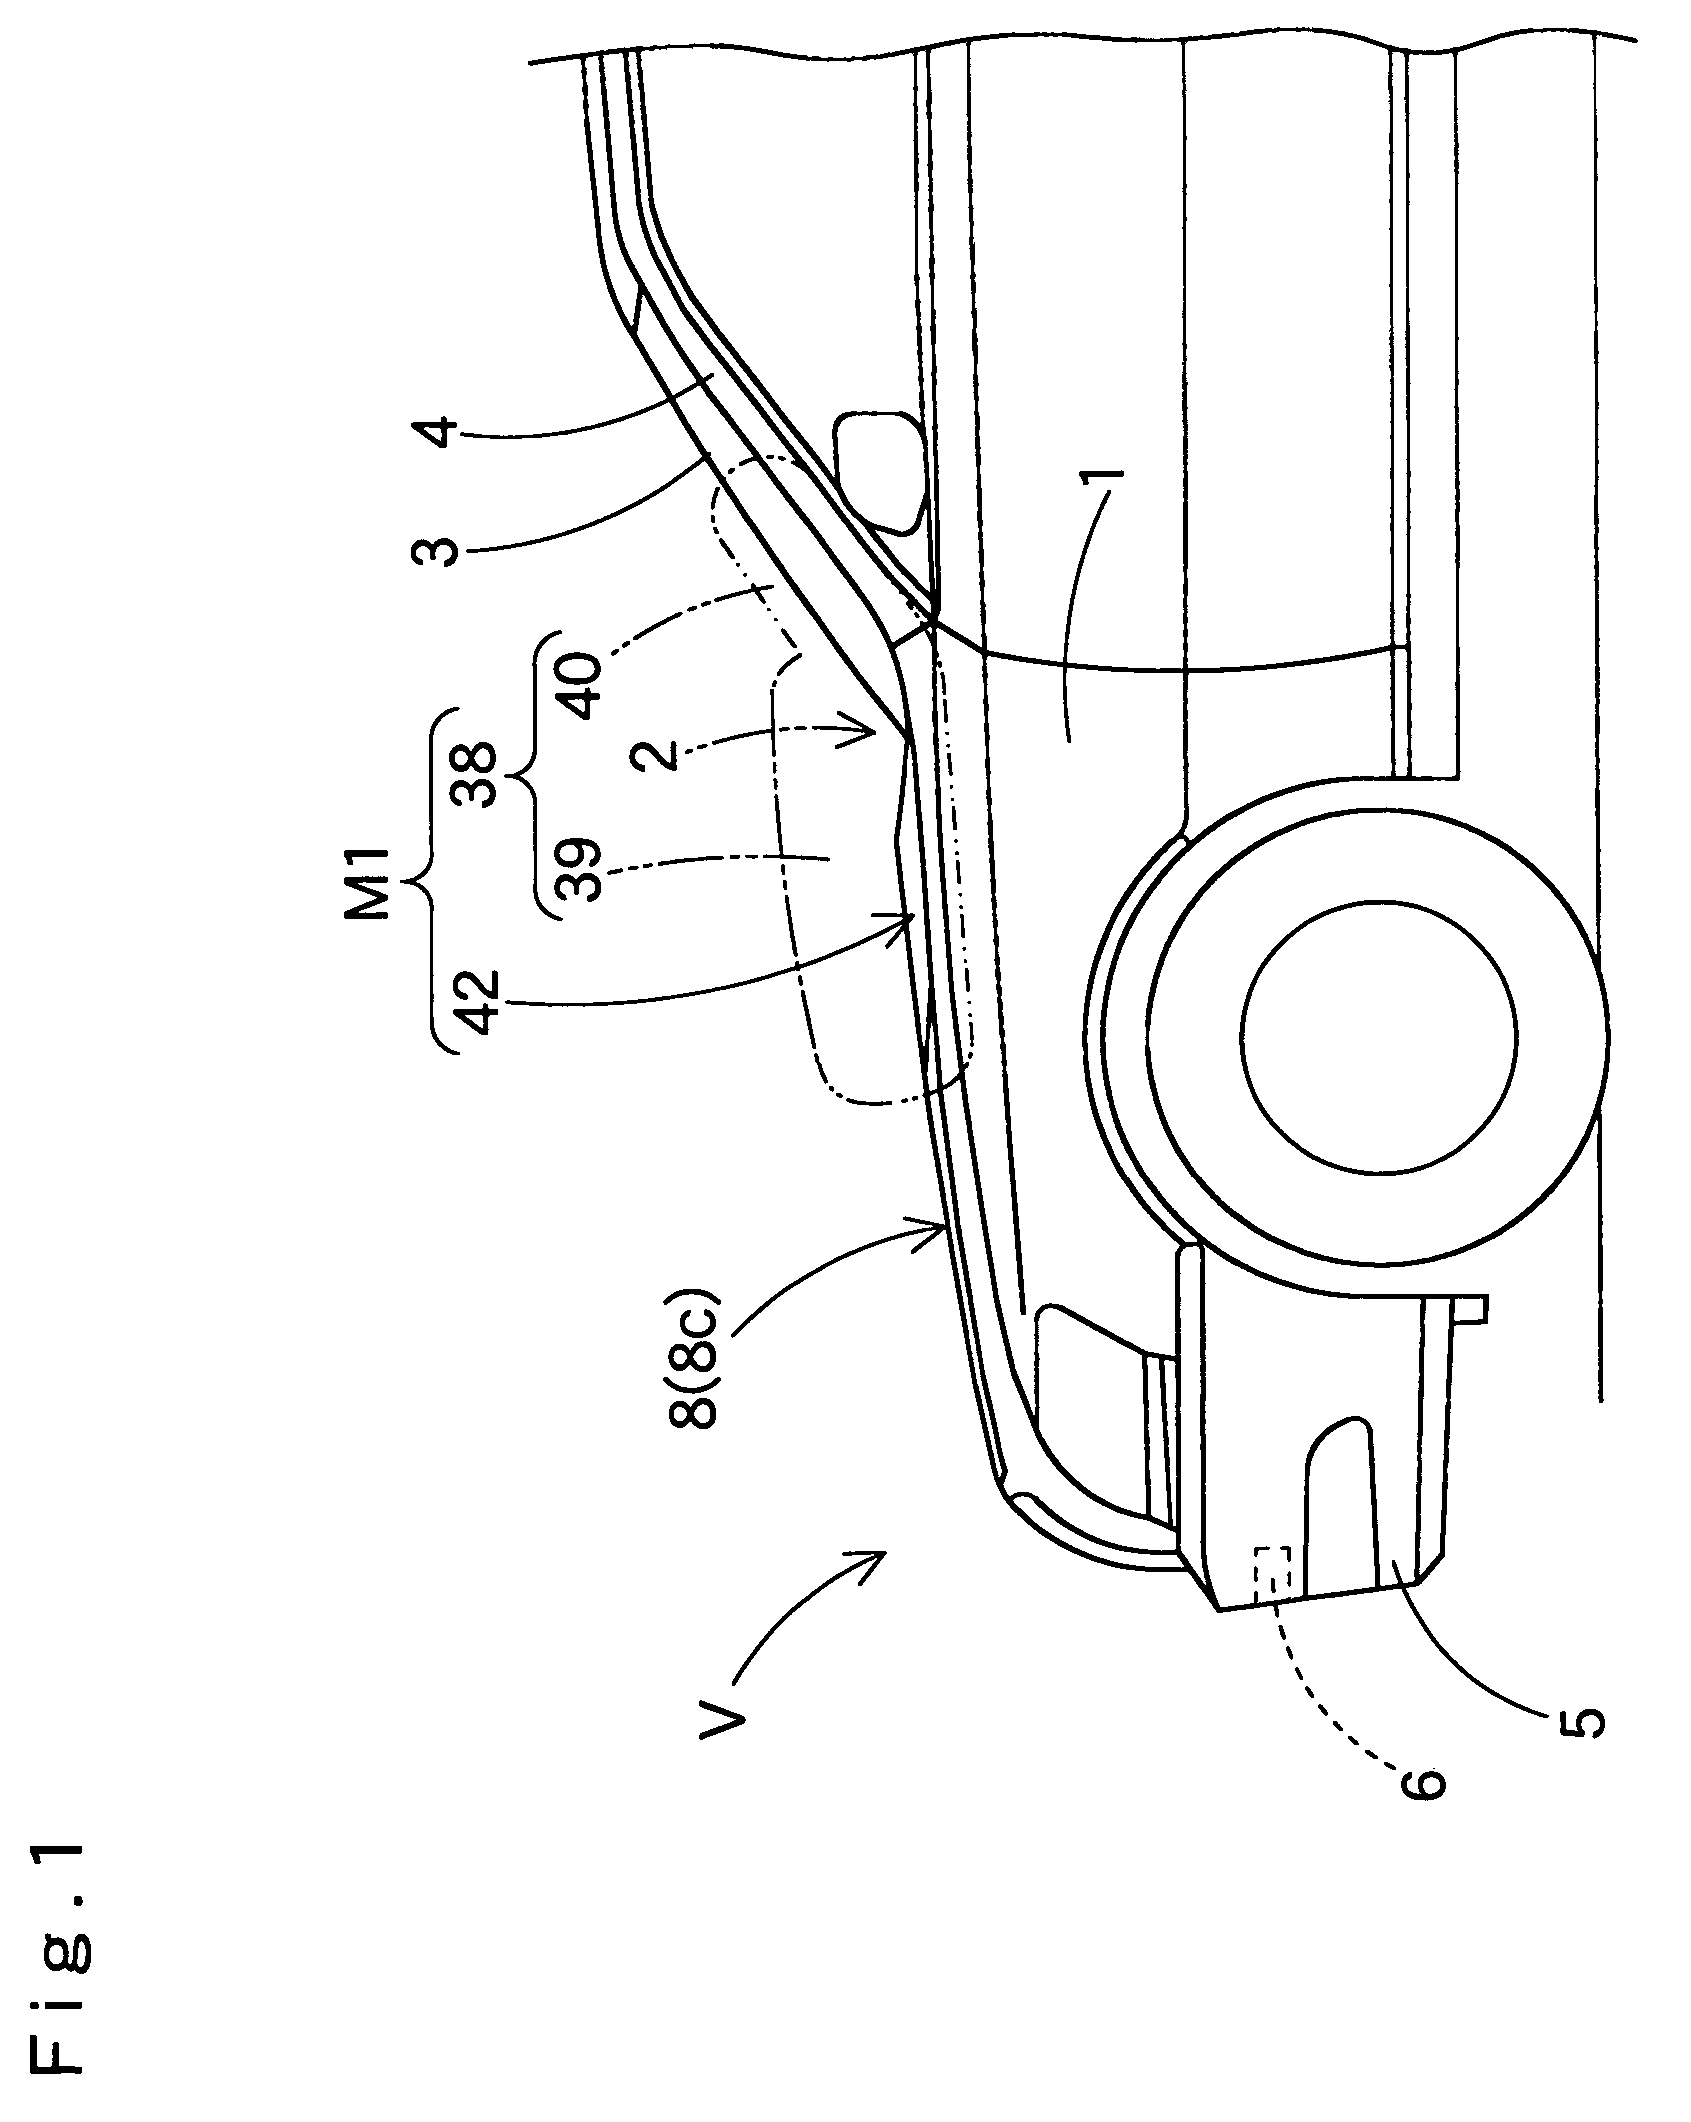 Pedestrian airbag system